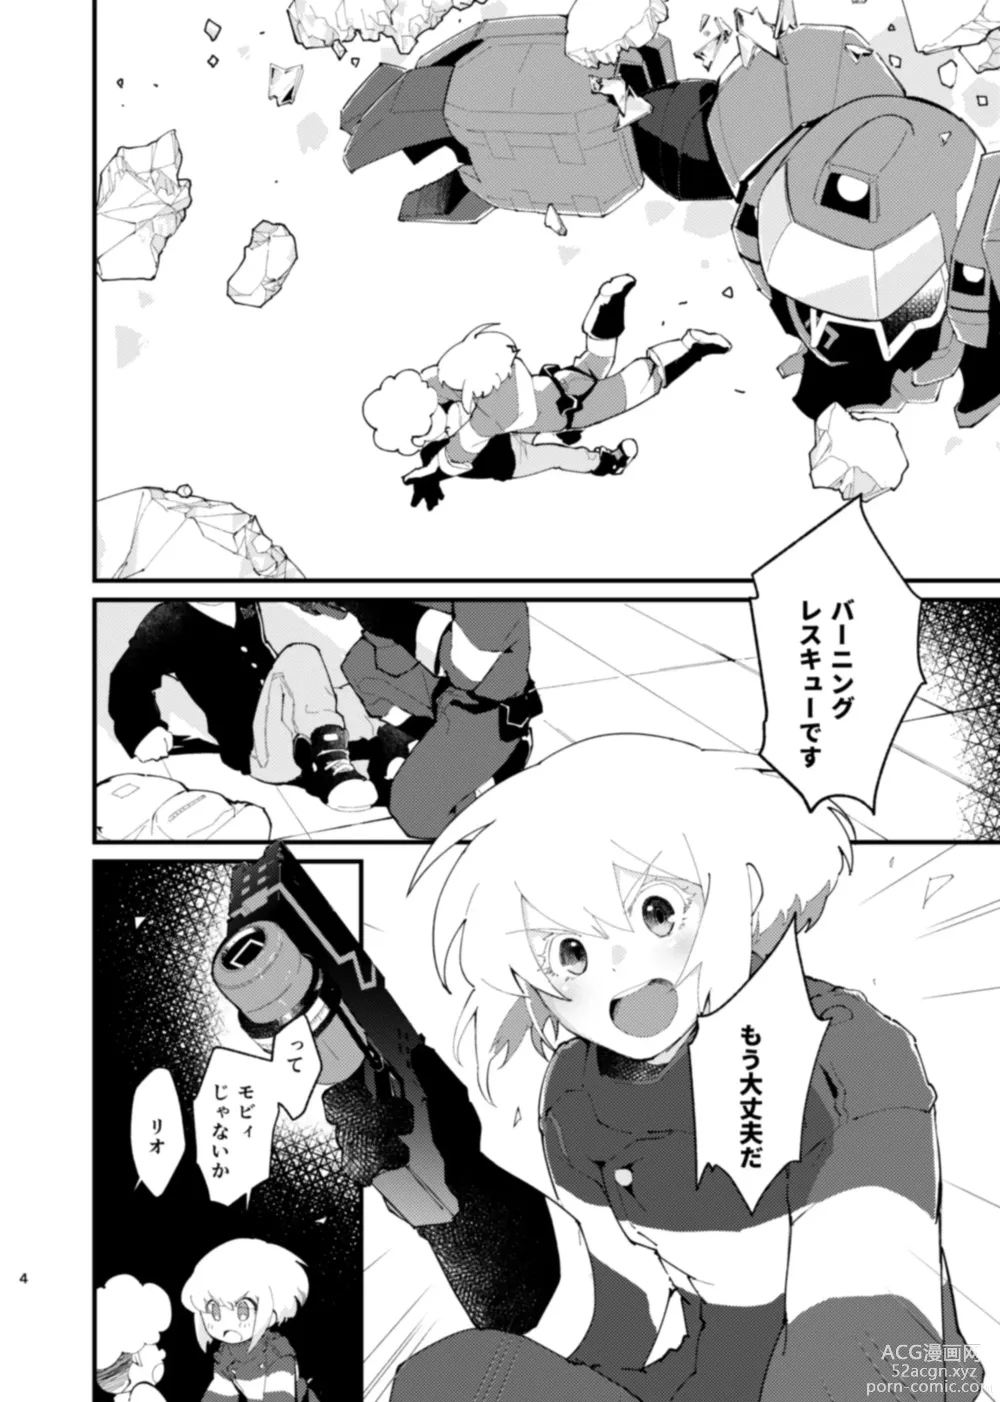 Page 4 of doujinshi NetoLio